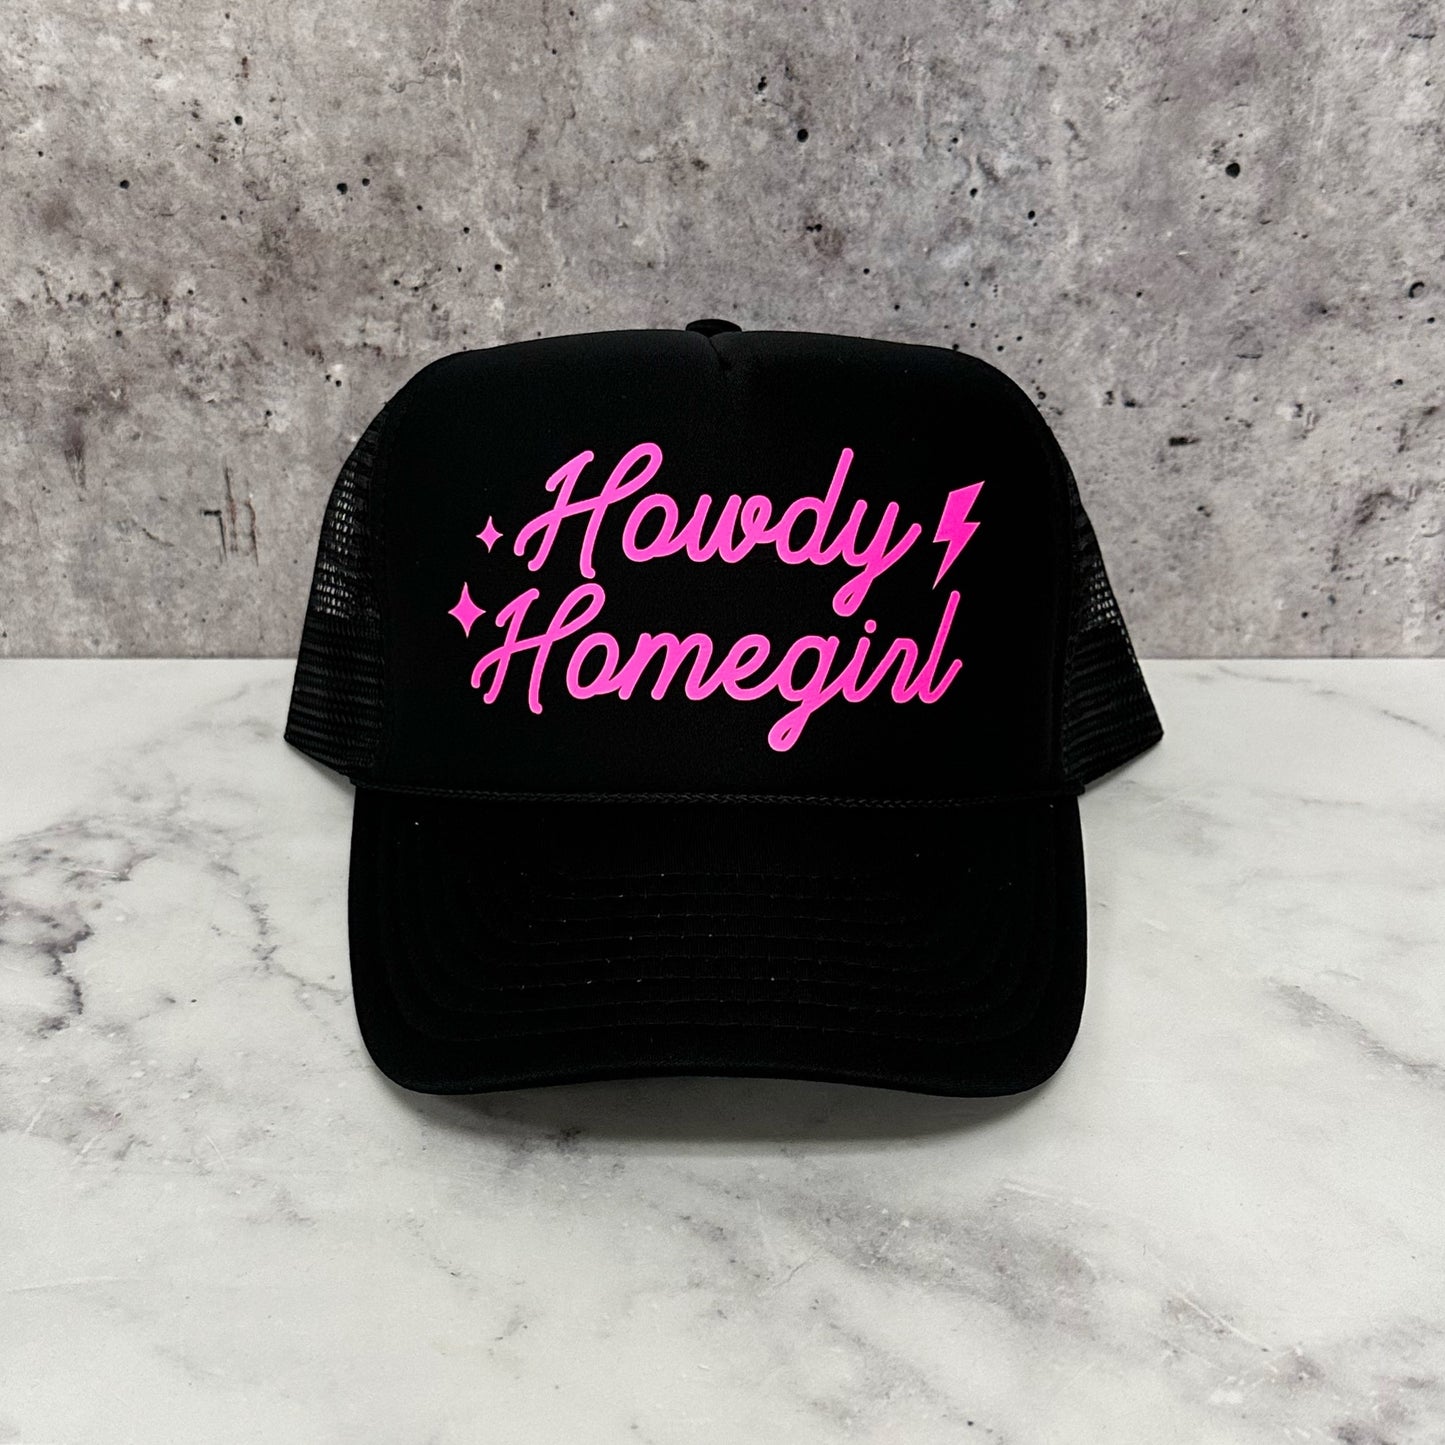 Howdy Homegirl Trucker Hat